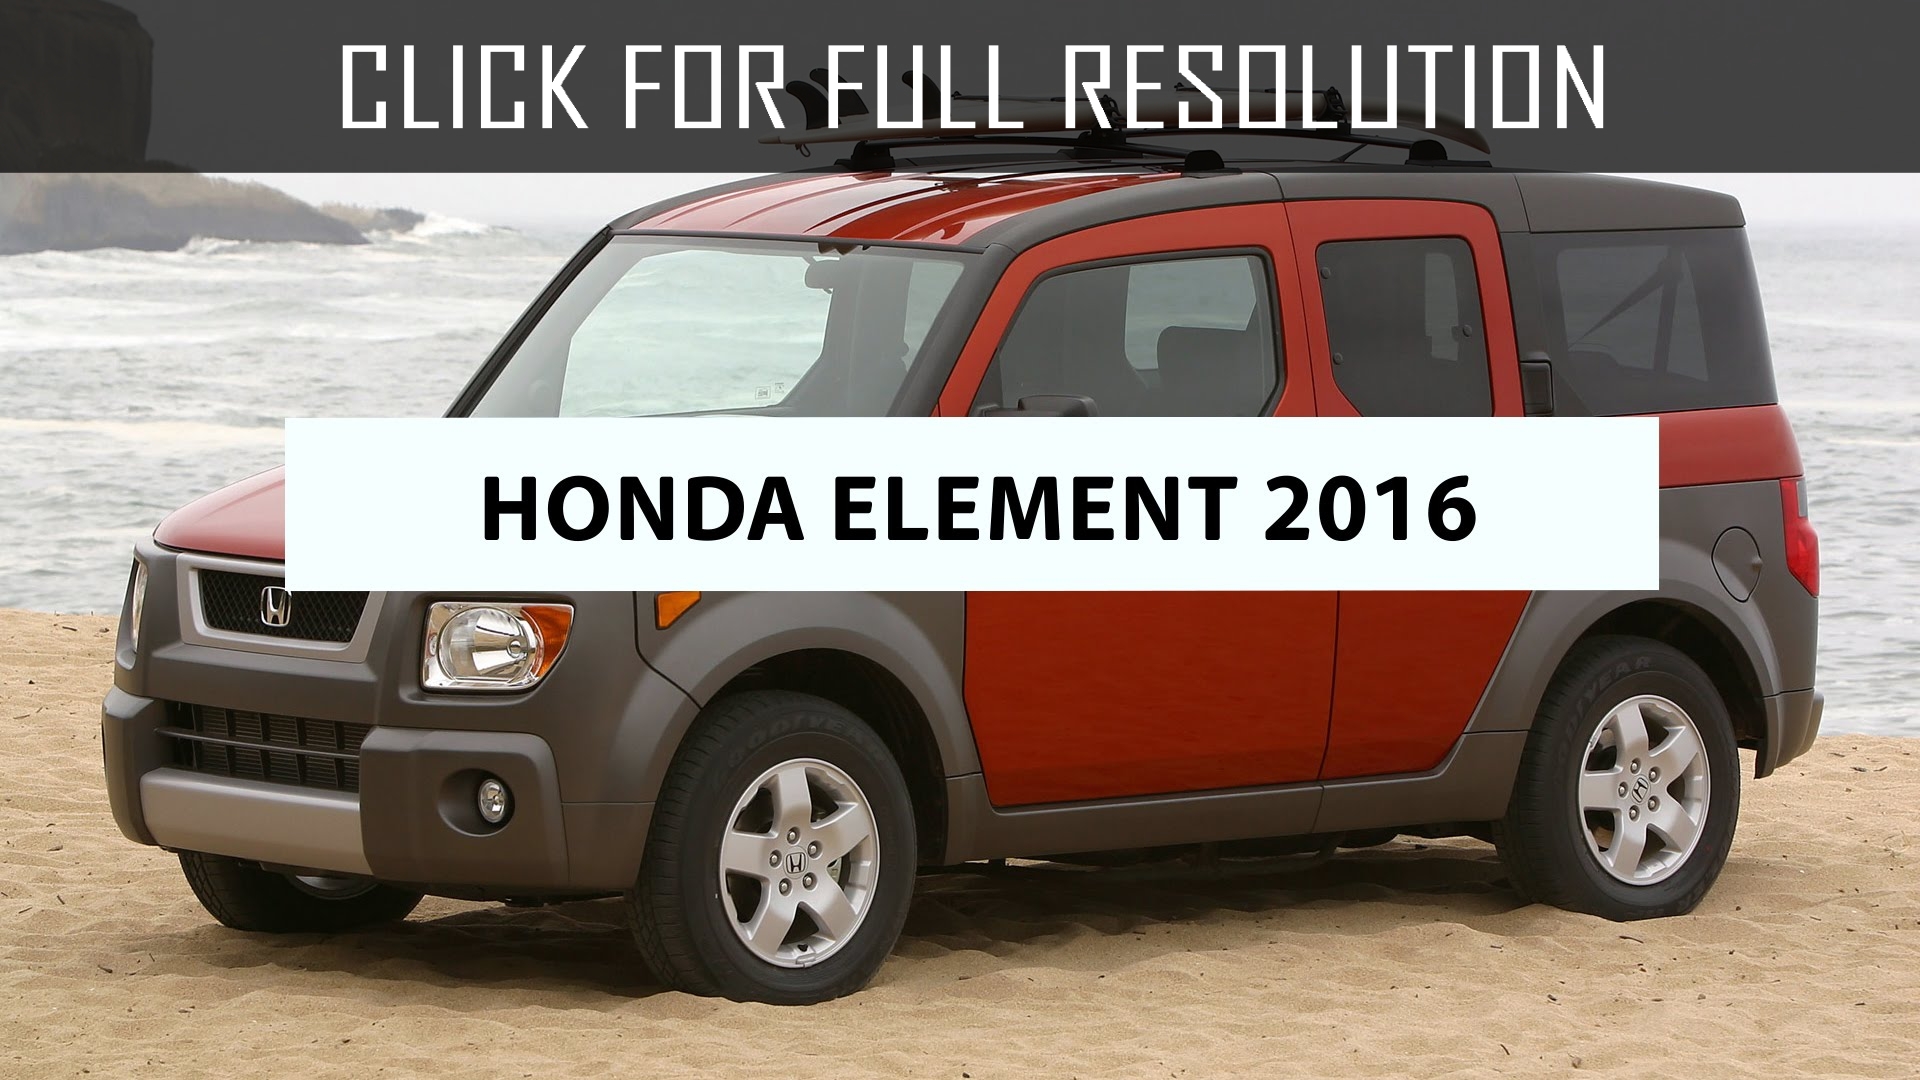 Honda Element 2016